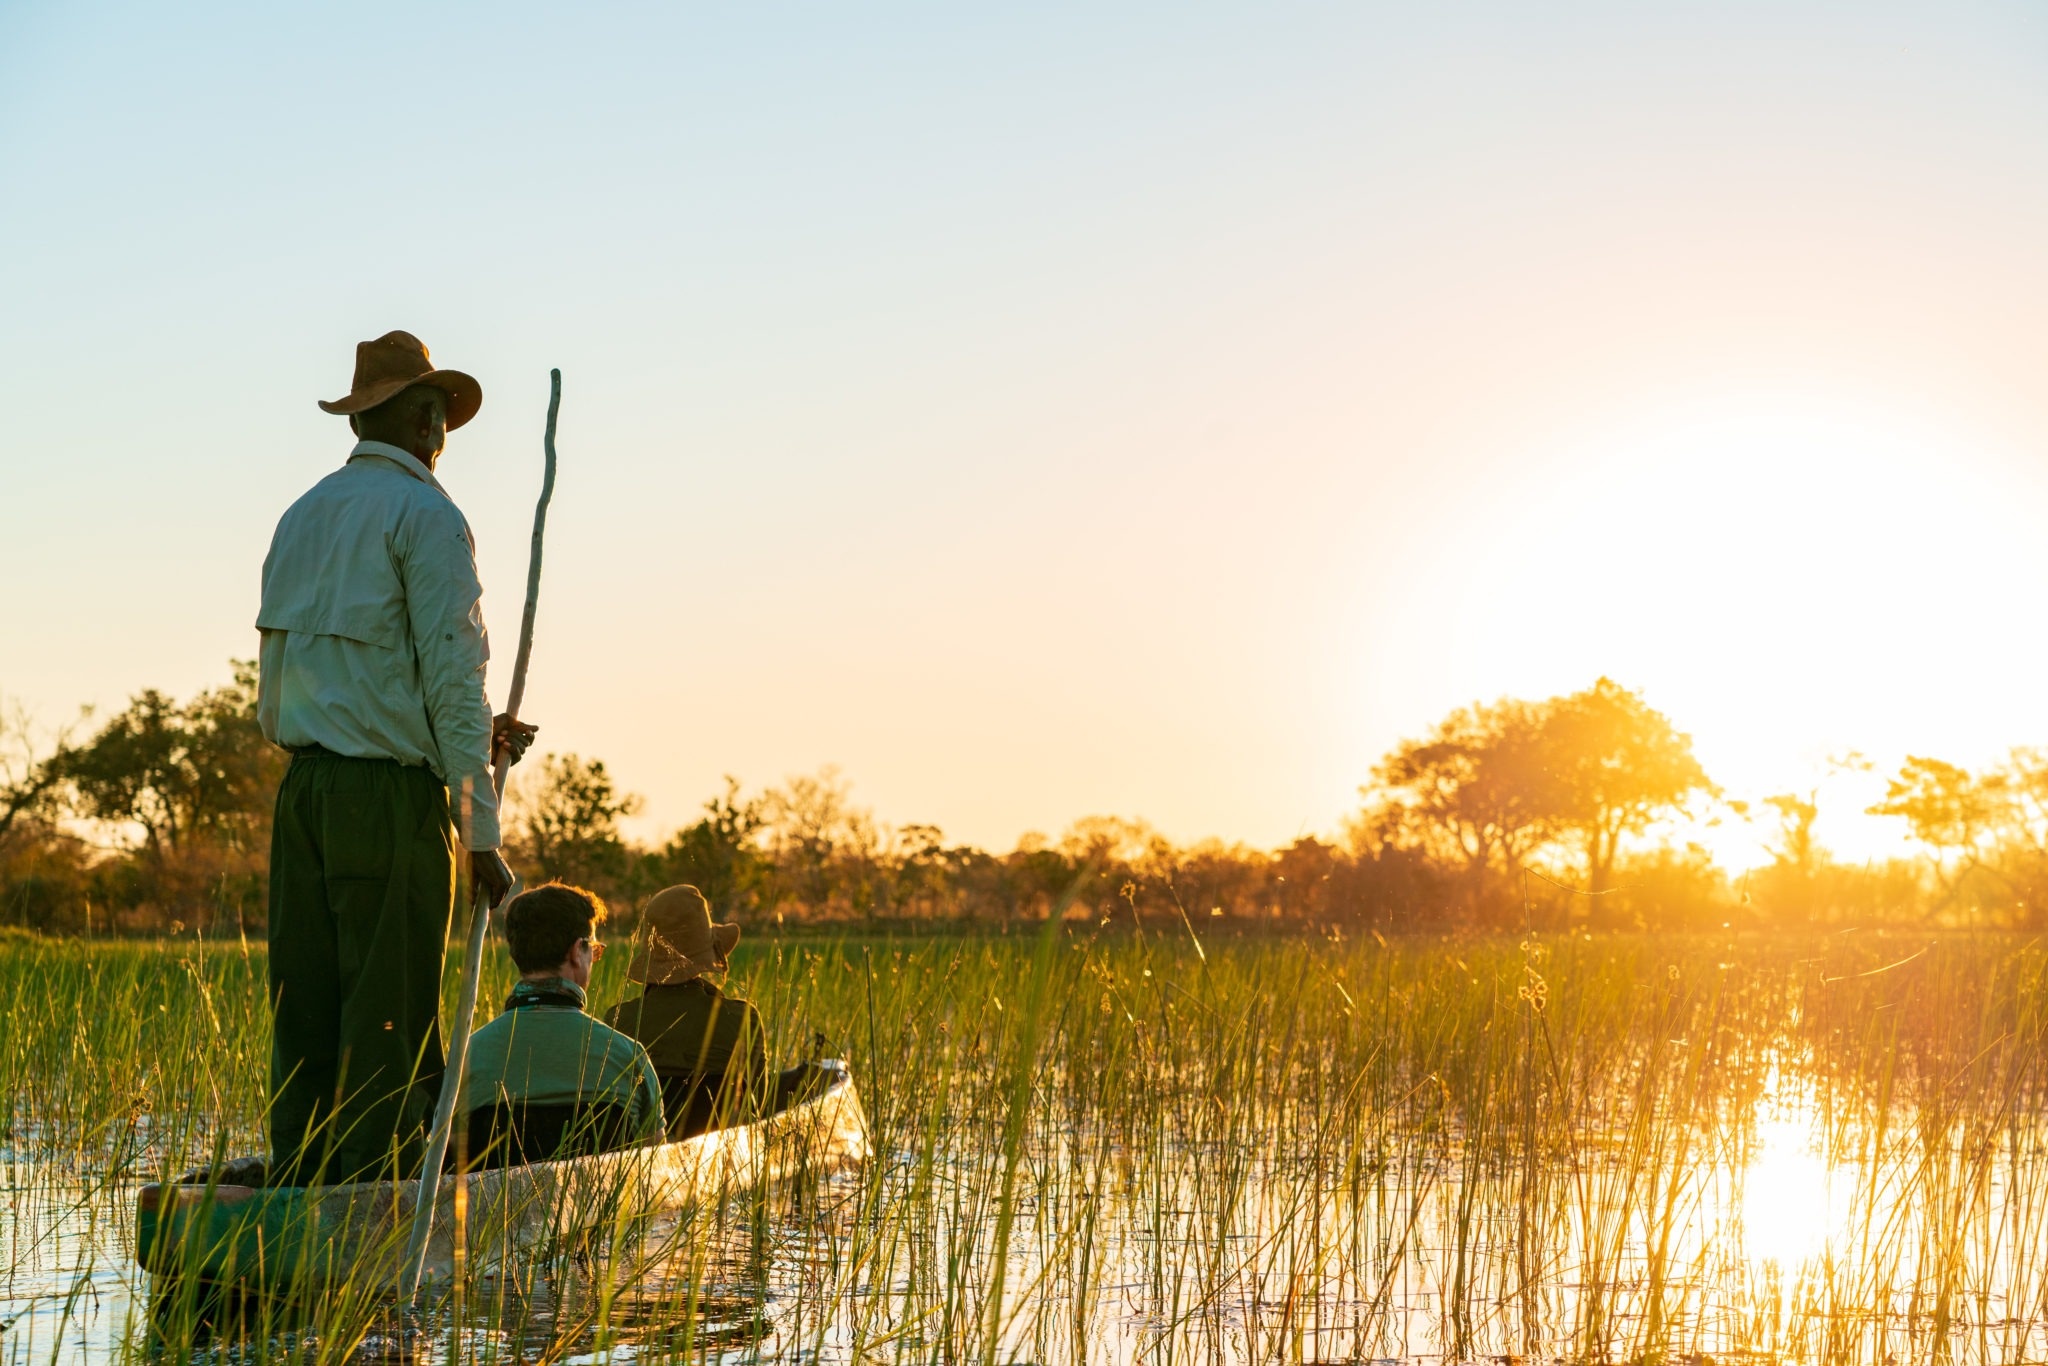 HD wallpaper, Travels, Safari Tours, Okavango Delta, 2050X1370 Hd Desktop, Authentic African Experience, Desktop Hd Okavango Delta Wallpaper Image